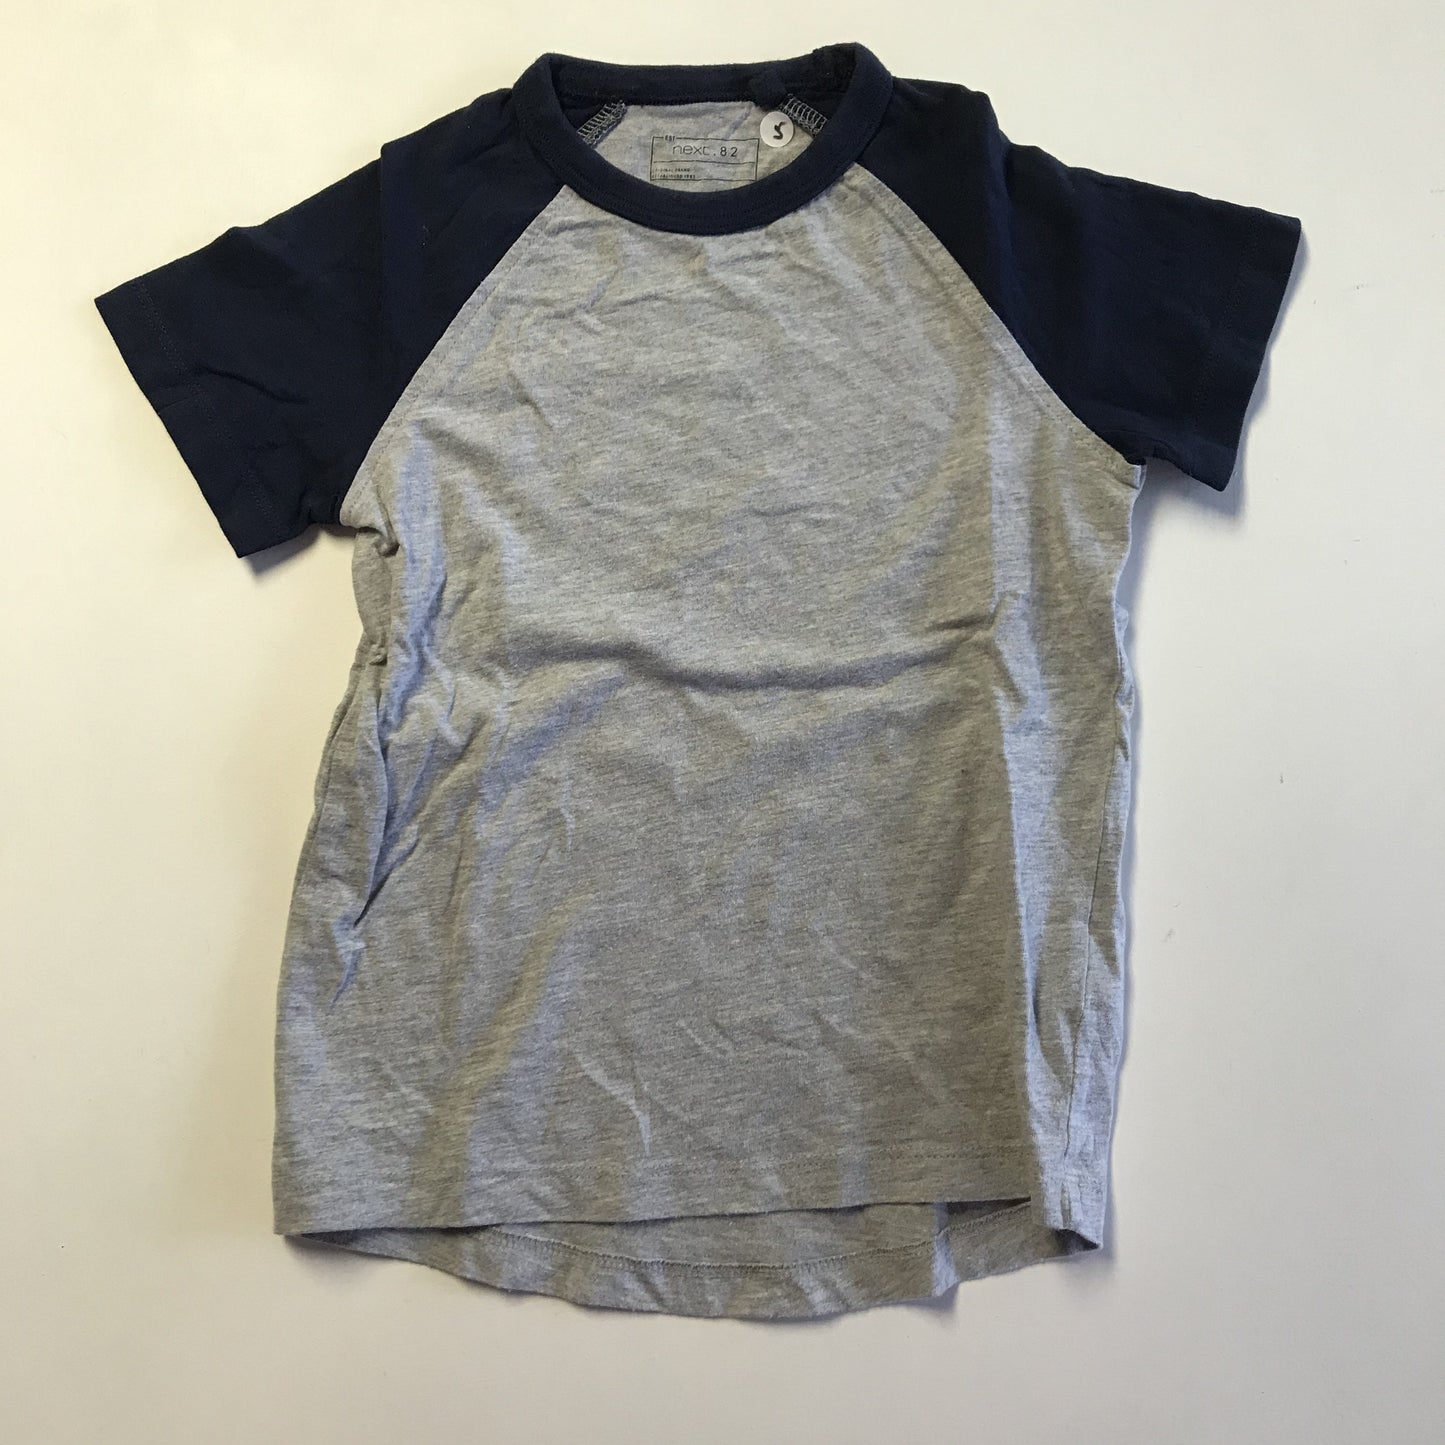 T-shirt - NEXT Grey - Age 5